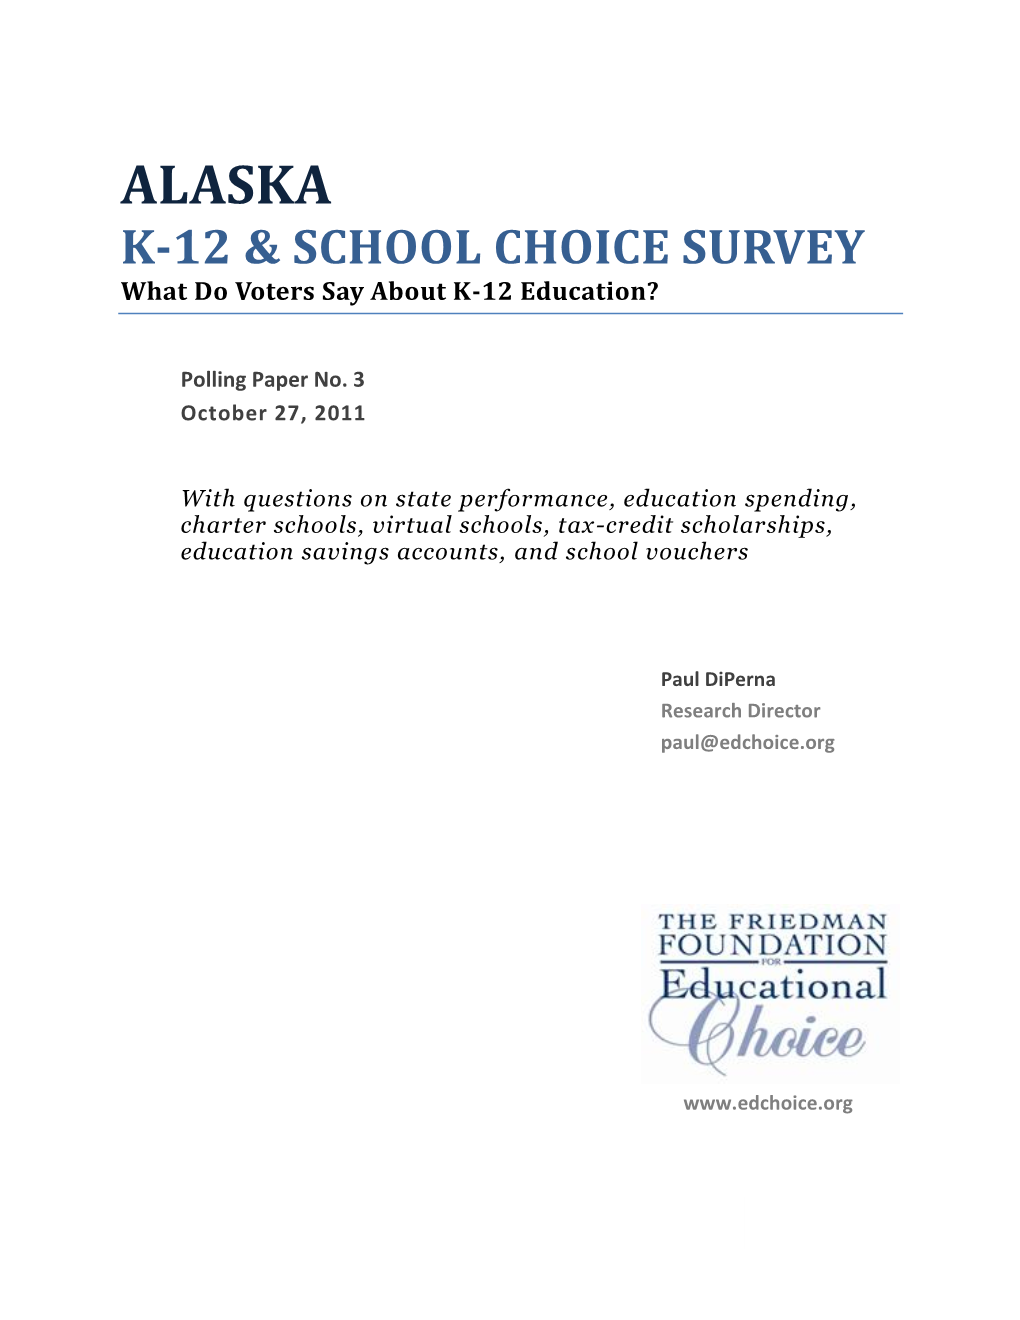 Alaska K-12 & School Choice Survey